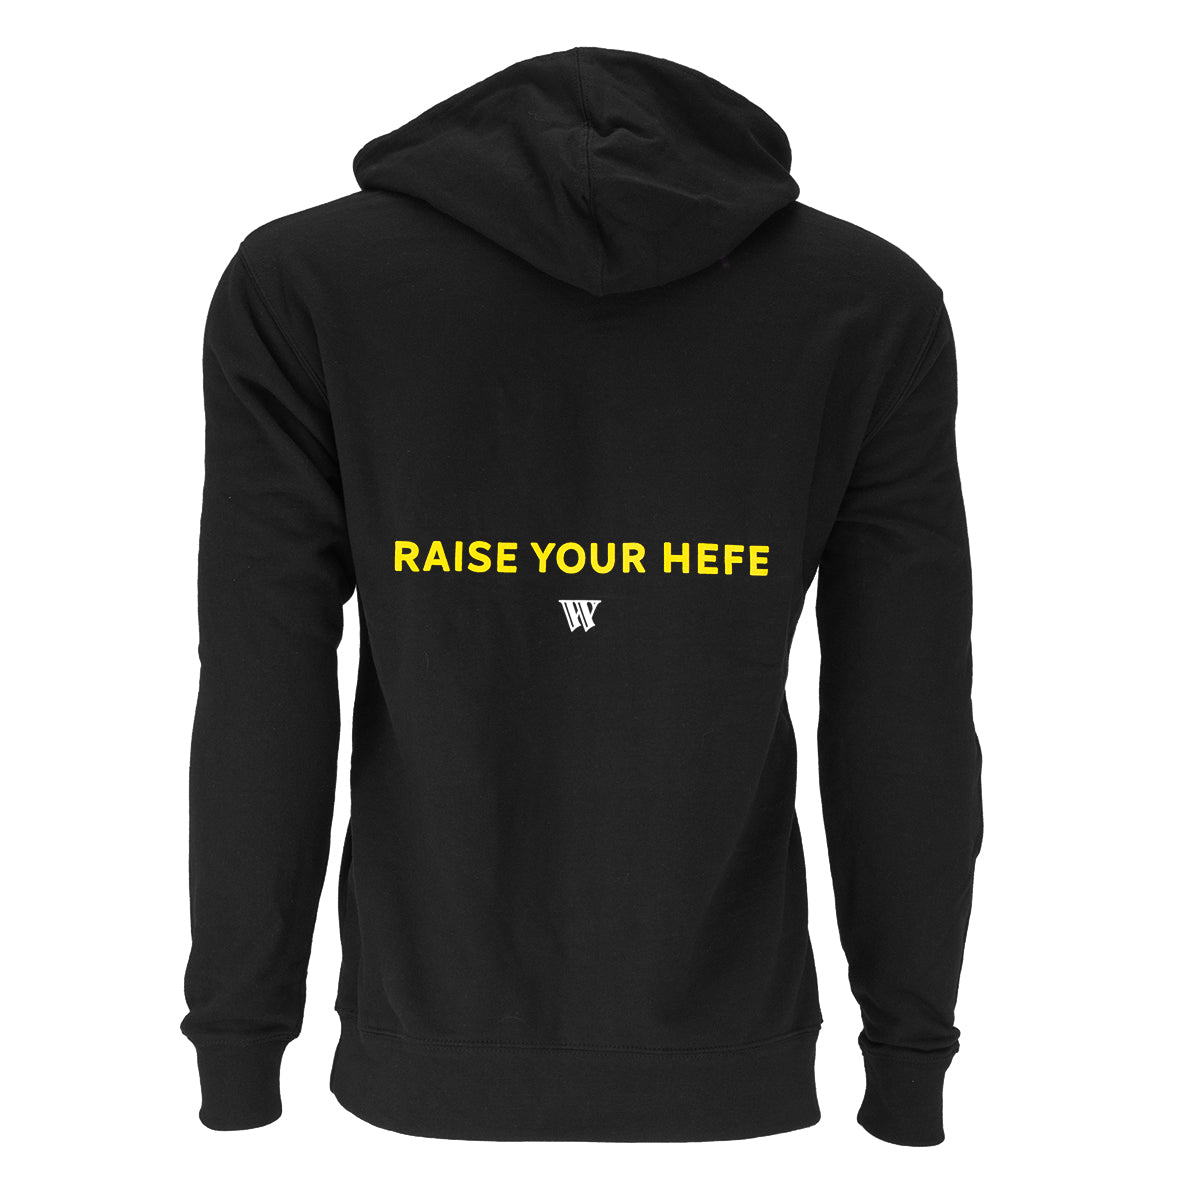 Raise Your Hefe - Pullover Hoodie - Black